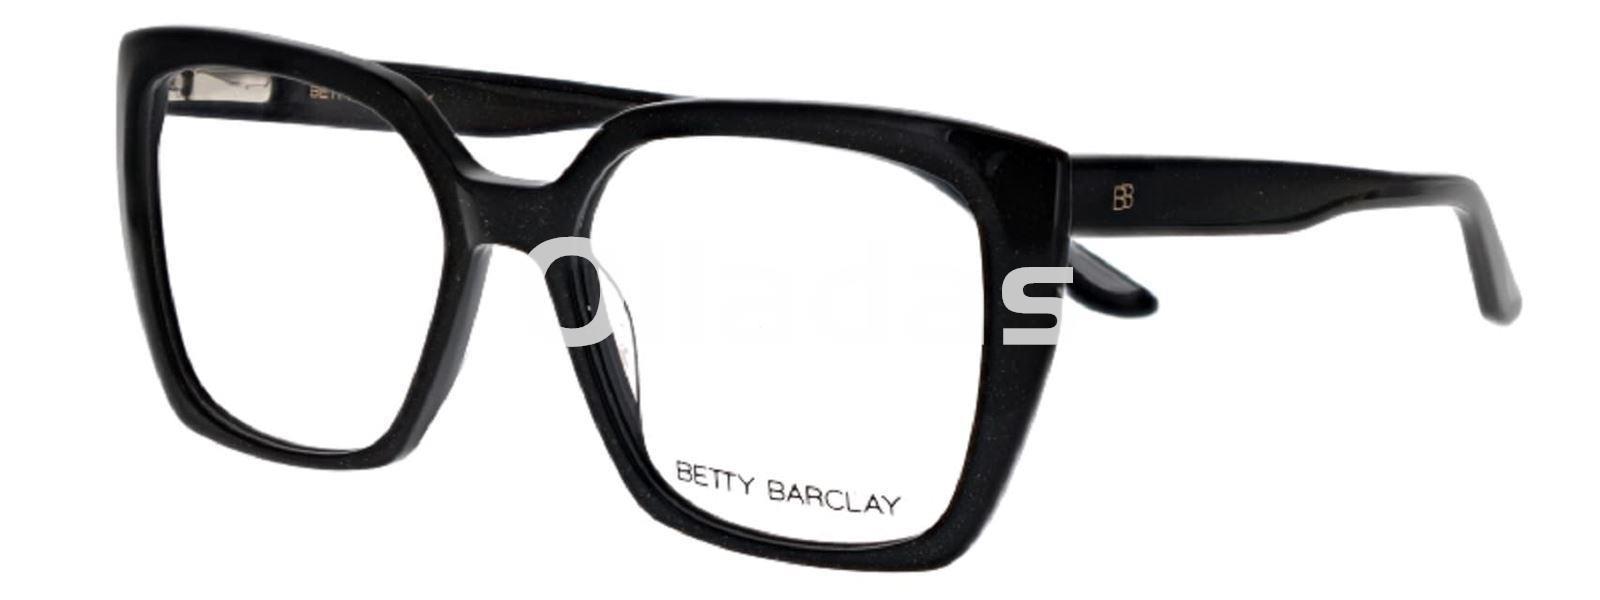 Betty Barclay 51217. - Imagen 1